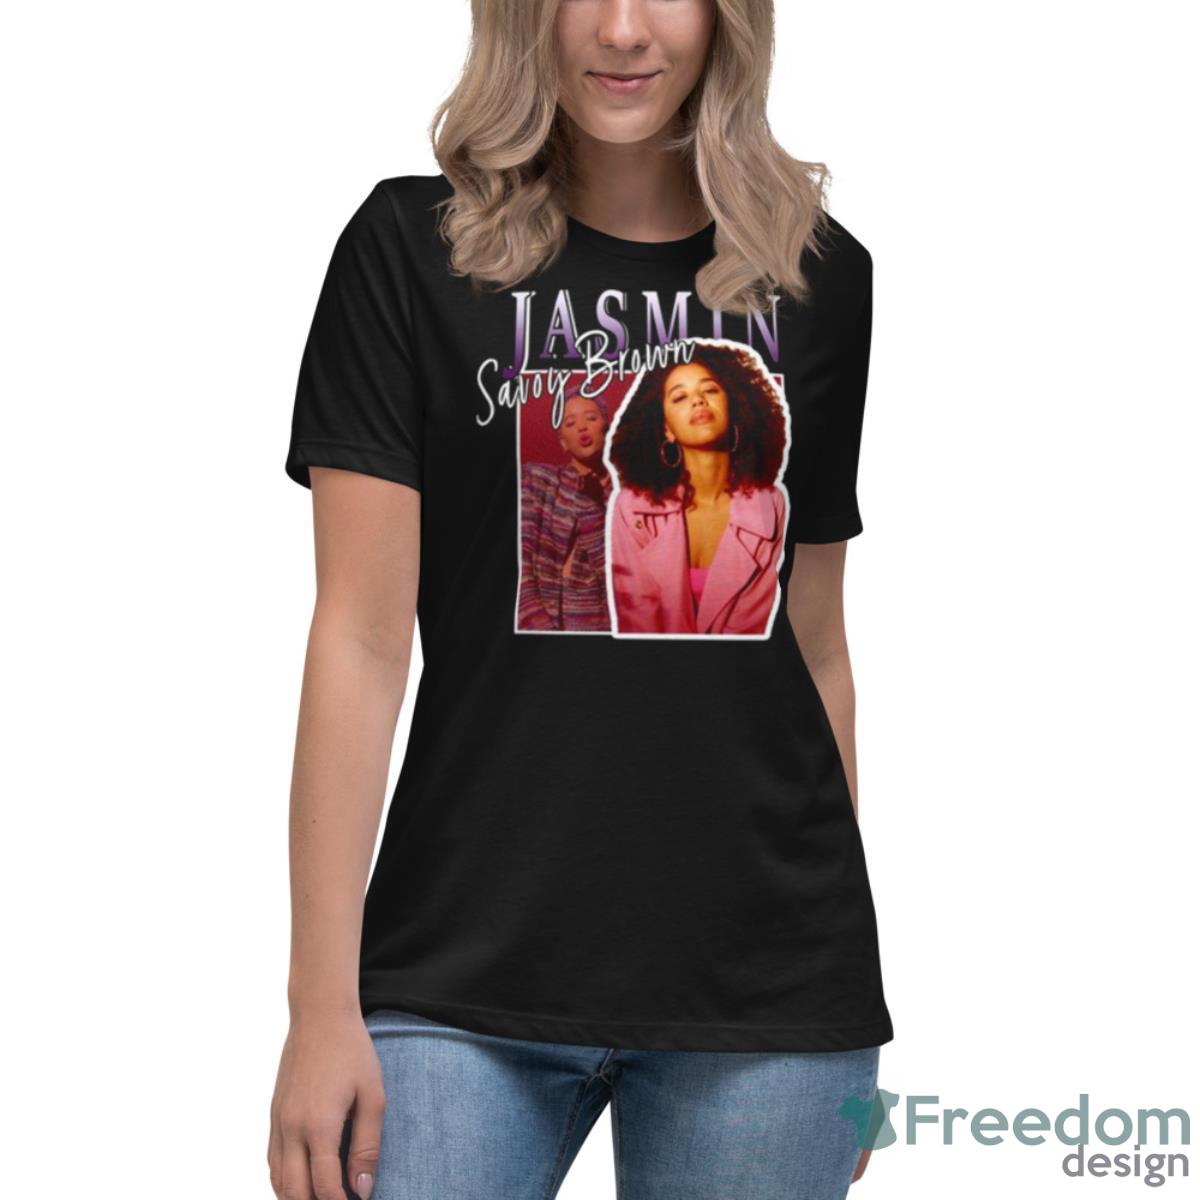 Jasmin Savoy Brown 90’s Yellowjackets Shirt